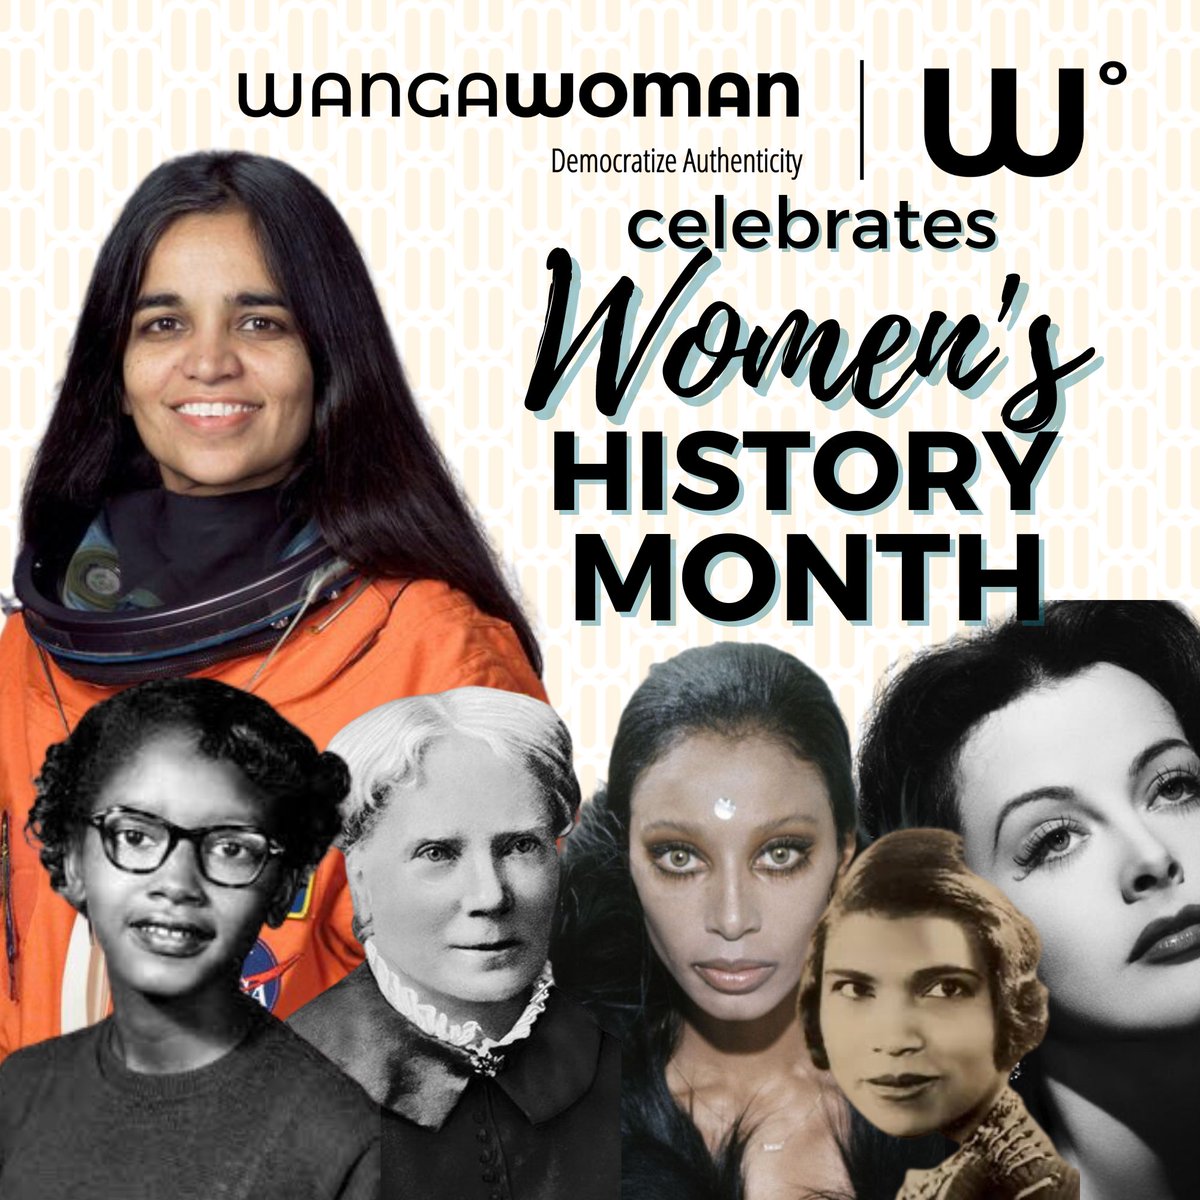 #WangaWoman celebrates Women’s History Month!
_
➡️ courses.wangawoman.com/p/coexistence

#CarolineAWanga #GoGetYourGreatness #womenempowerment #changingwomenslives #womeninculture #extraordinarywomen #womeninstem #womensupportingwomen #womensrights